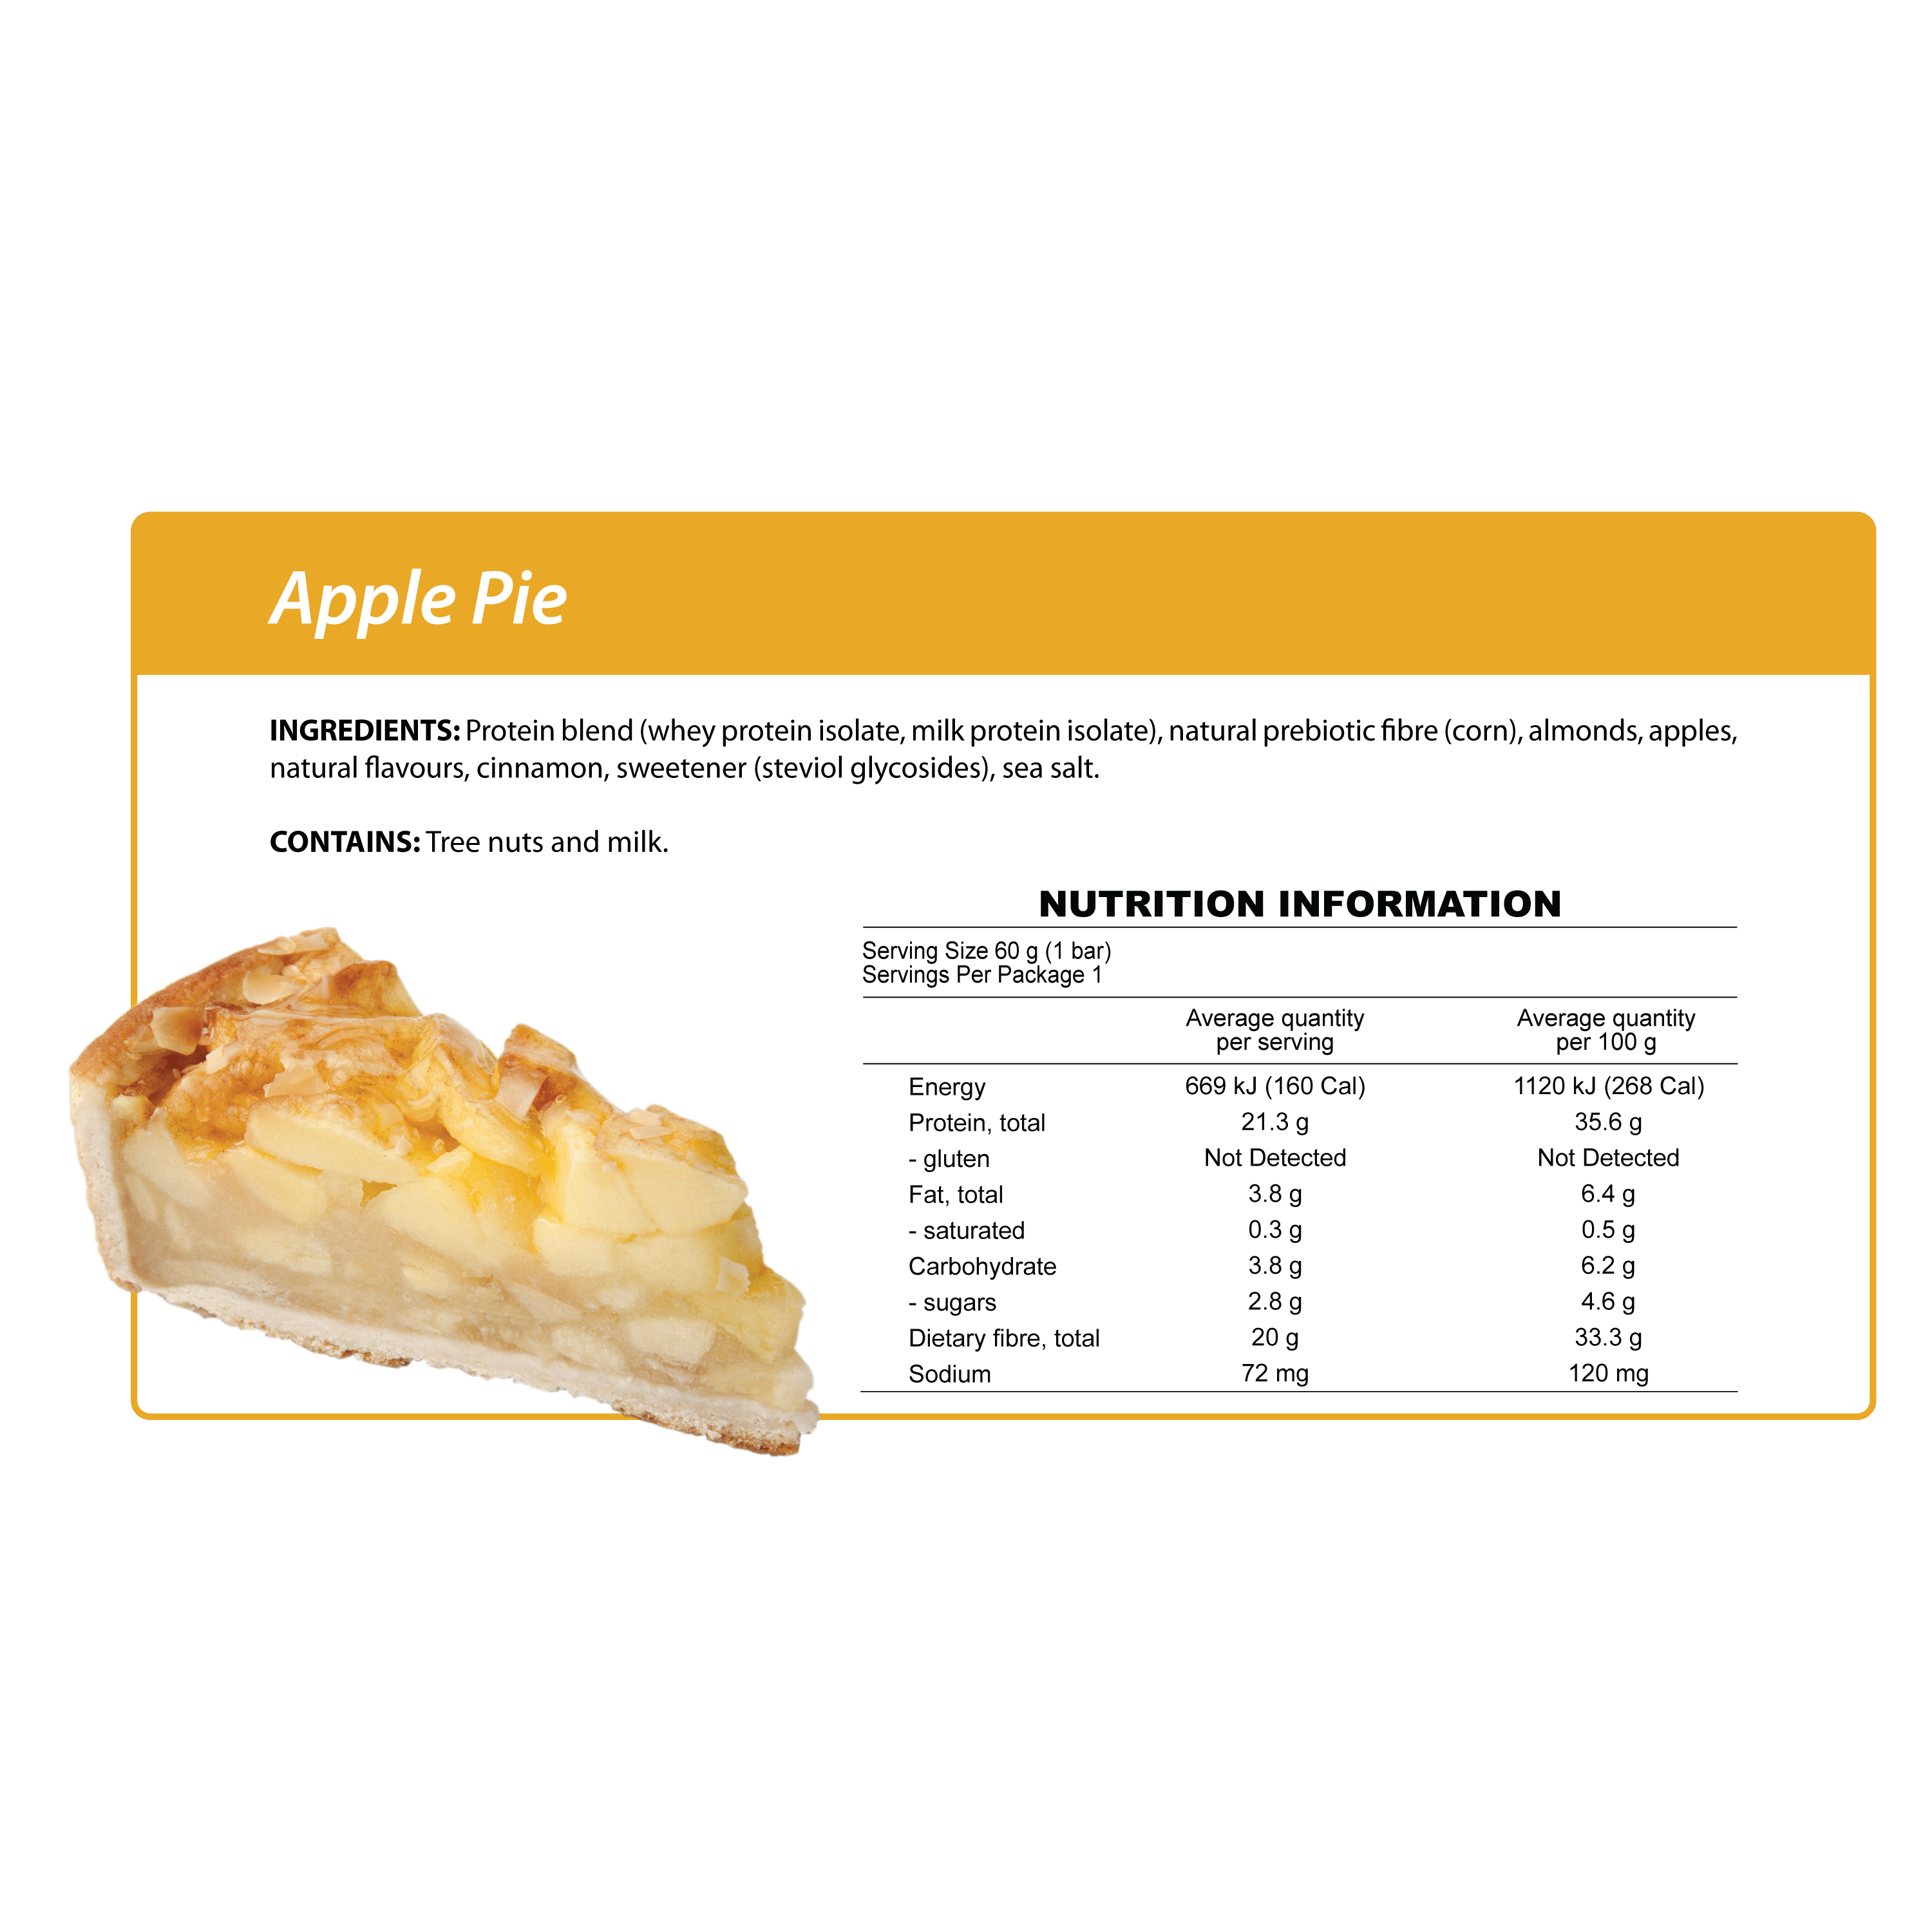 Smart Protein Bar - Apple Pie - Box of 12 - 720g - Ketogenic Supplies